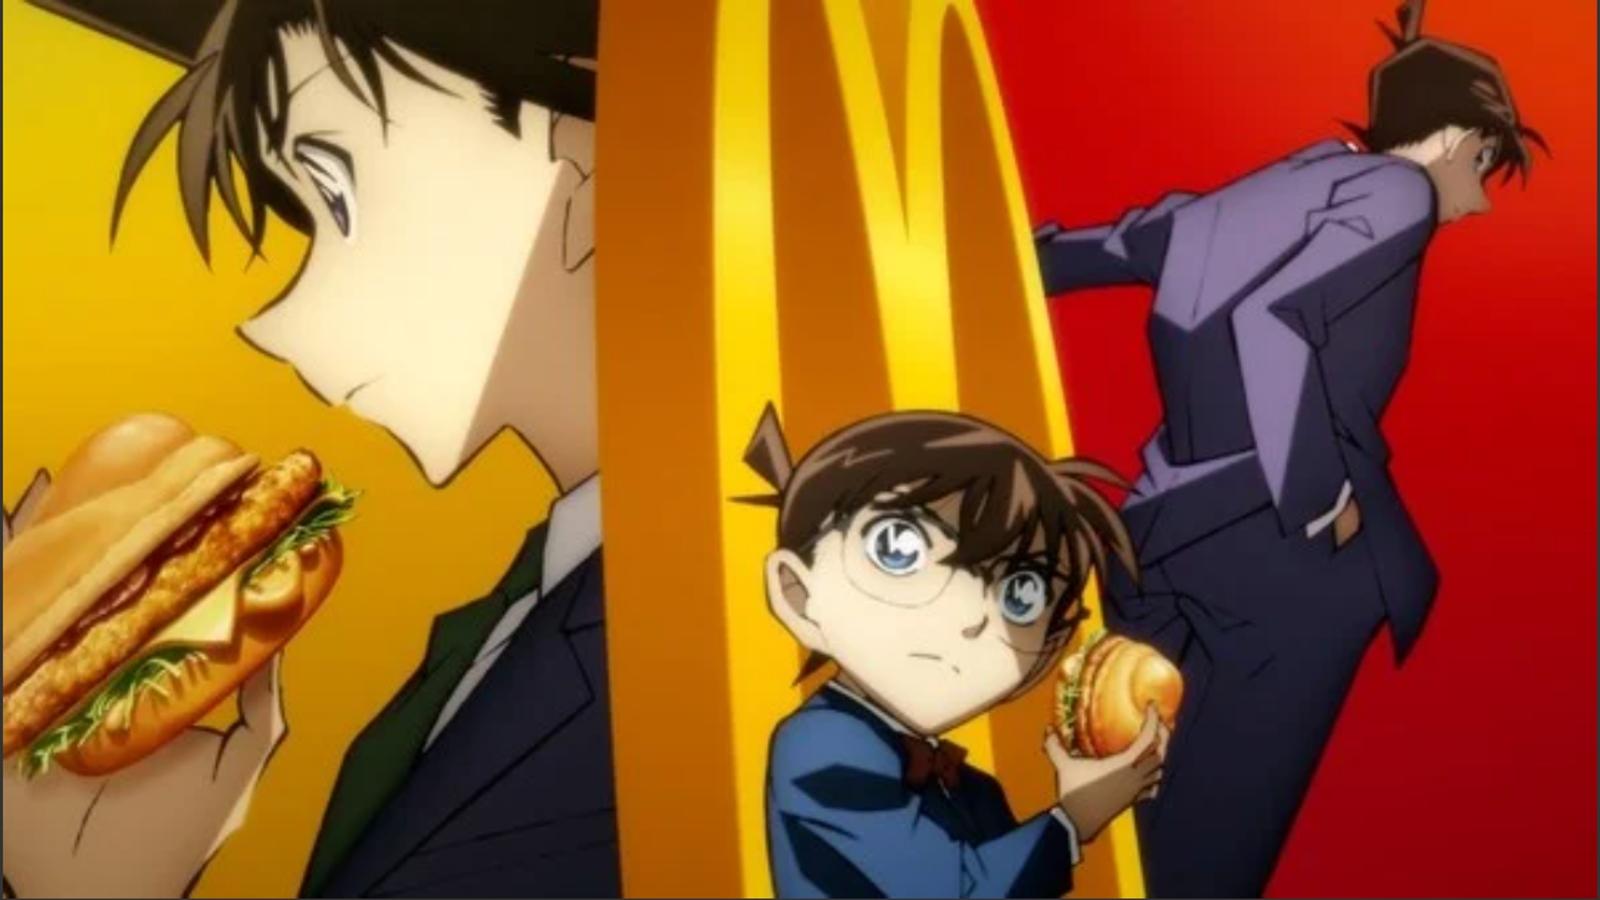 McDonald's detective conan collab